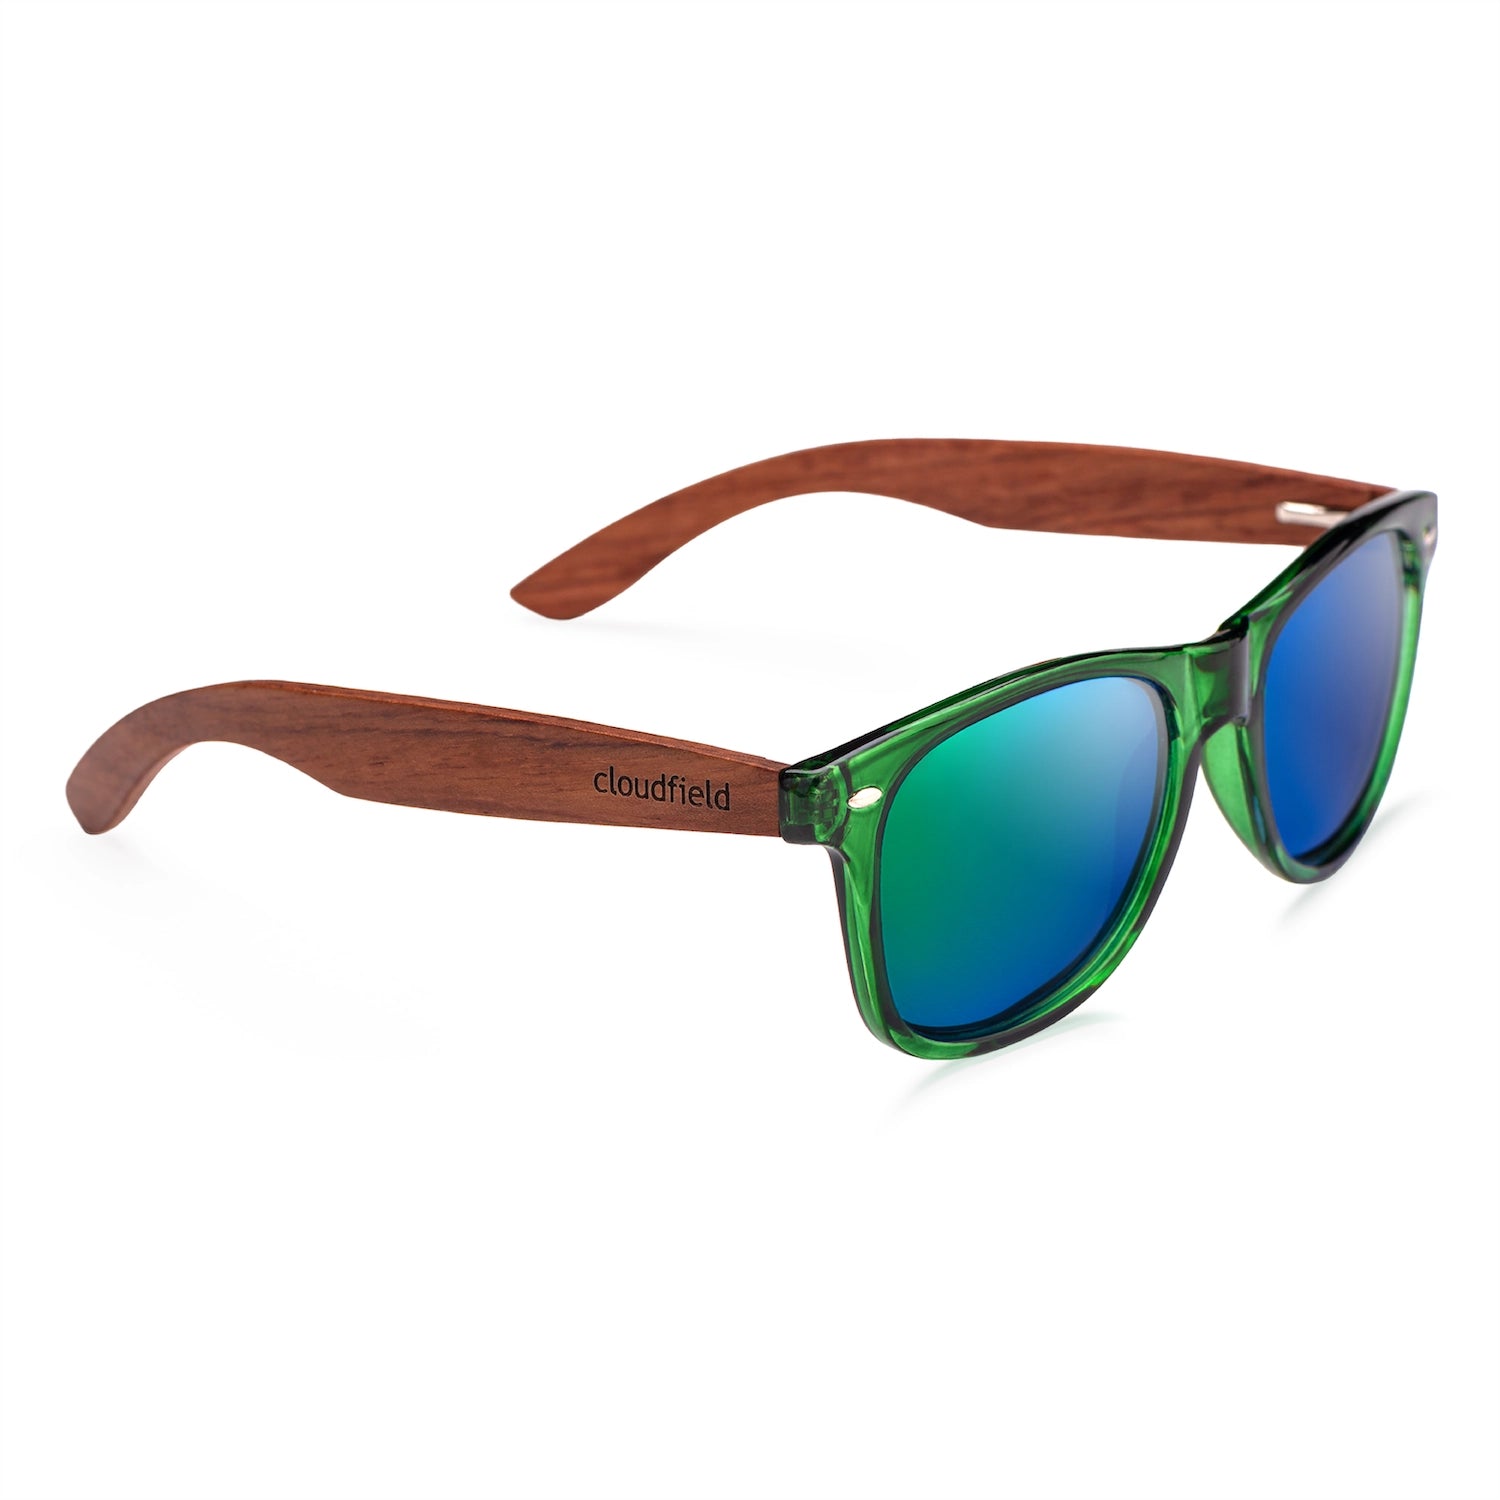 Cloudfield Unisex Polarized Wood Sunglasses - Blue Green